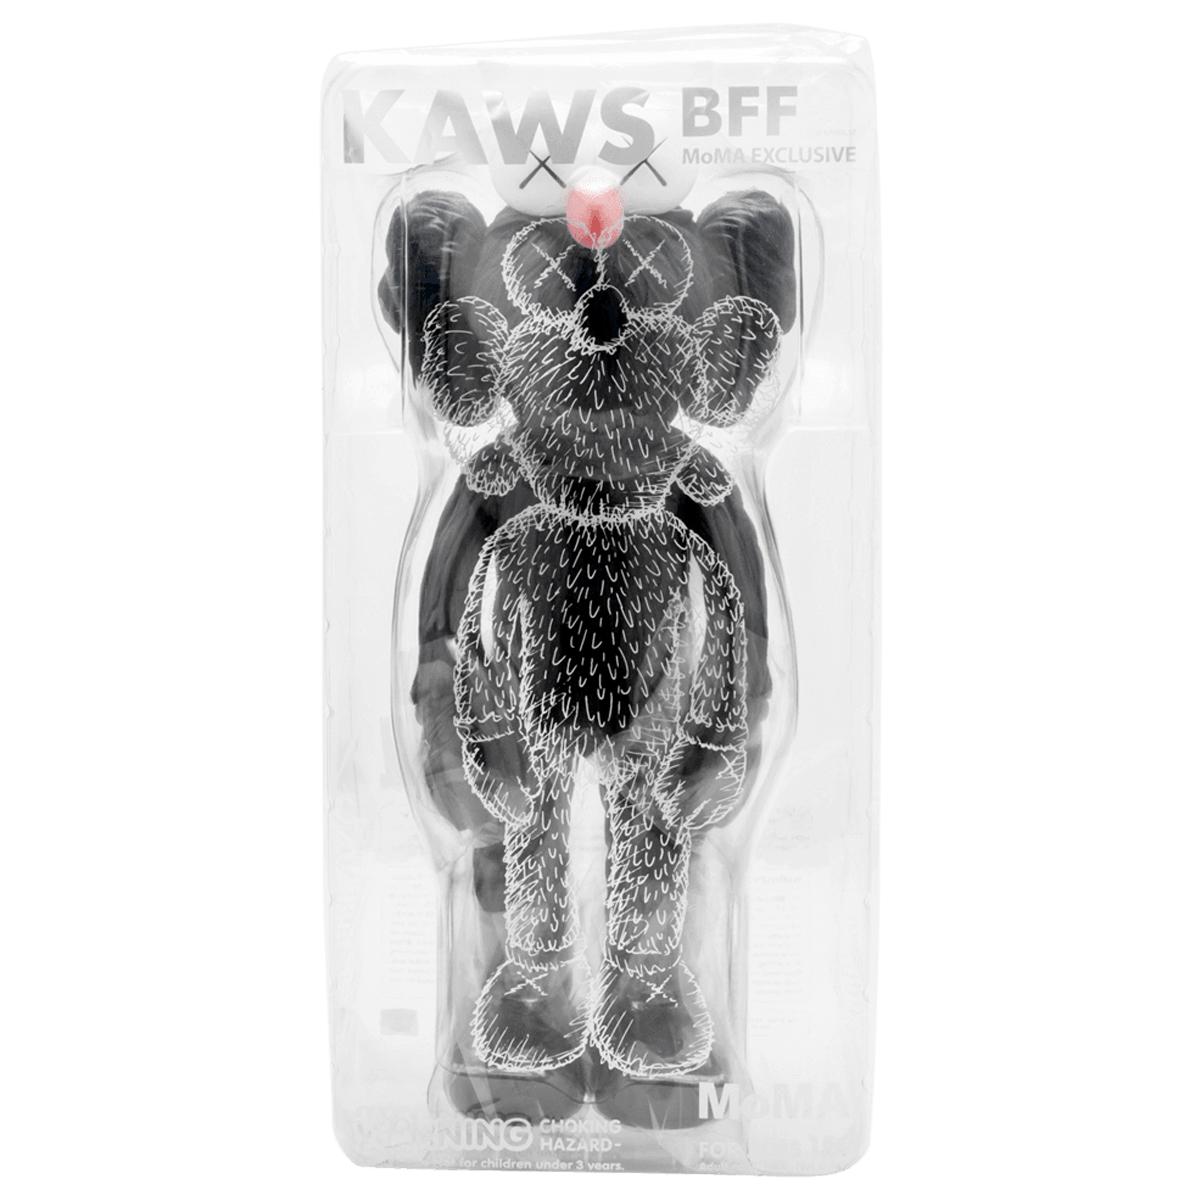 KAWS: BFF (Black) - Original Vinyl Sculpture, Street art, Pop Art. MOMA sold out 1